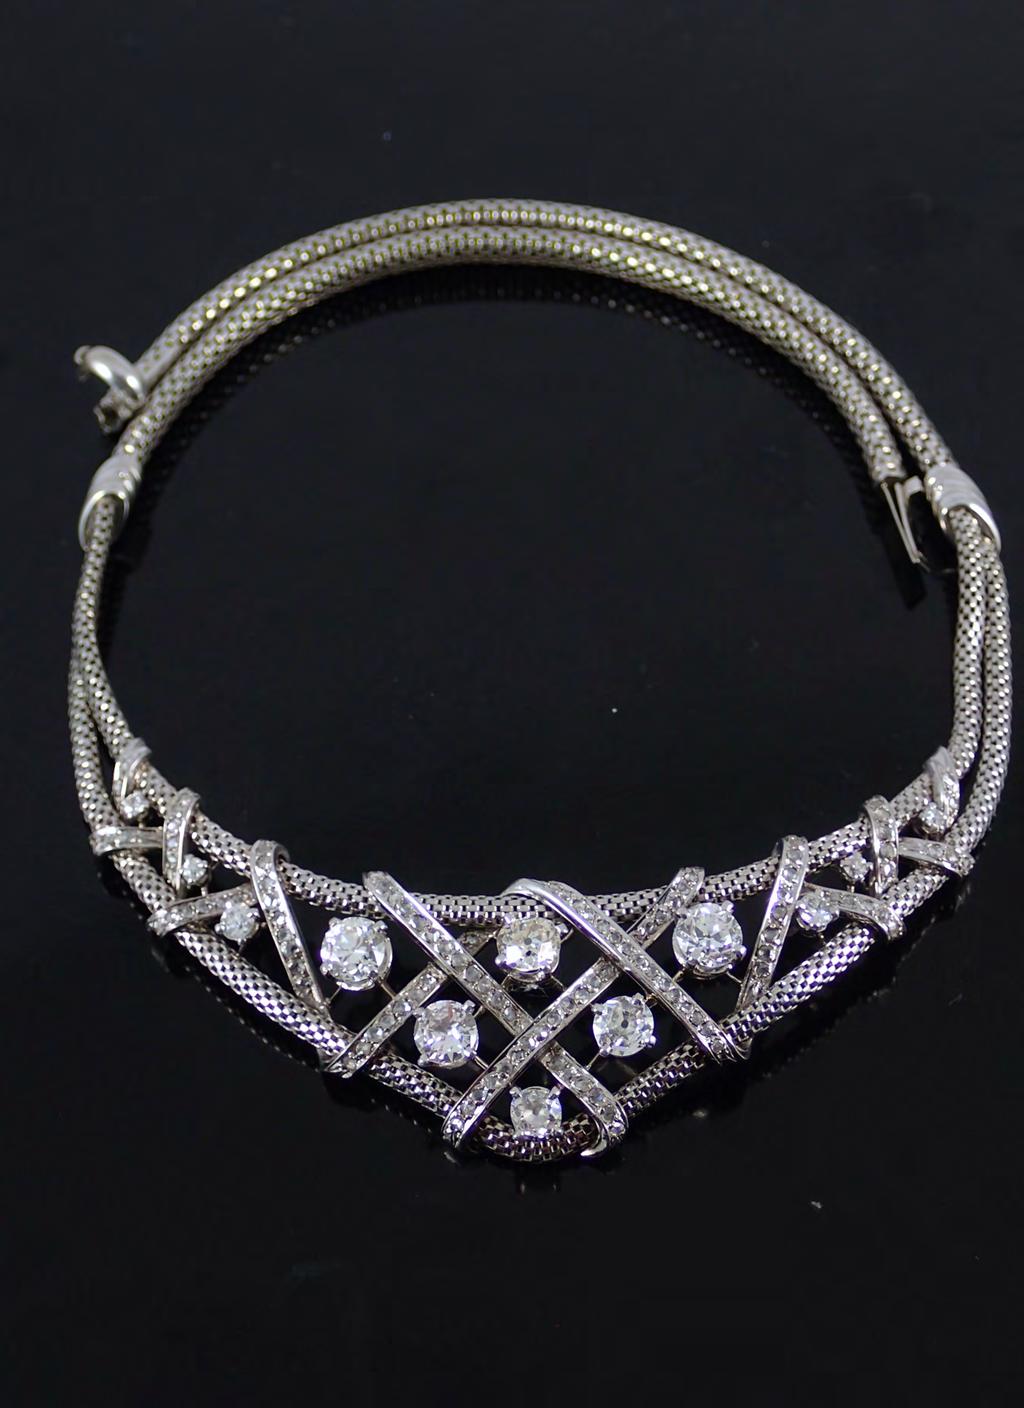 230 13,000-15,000 227 A fine diamond set necklace, total estimated weight of diamonds 4.